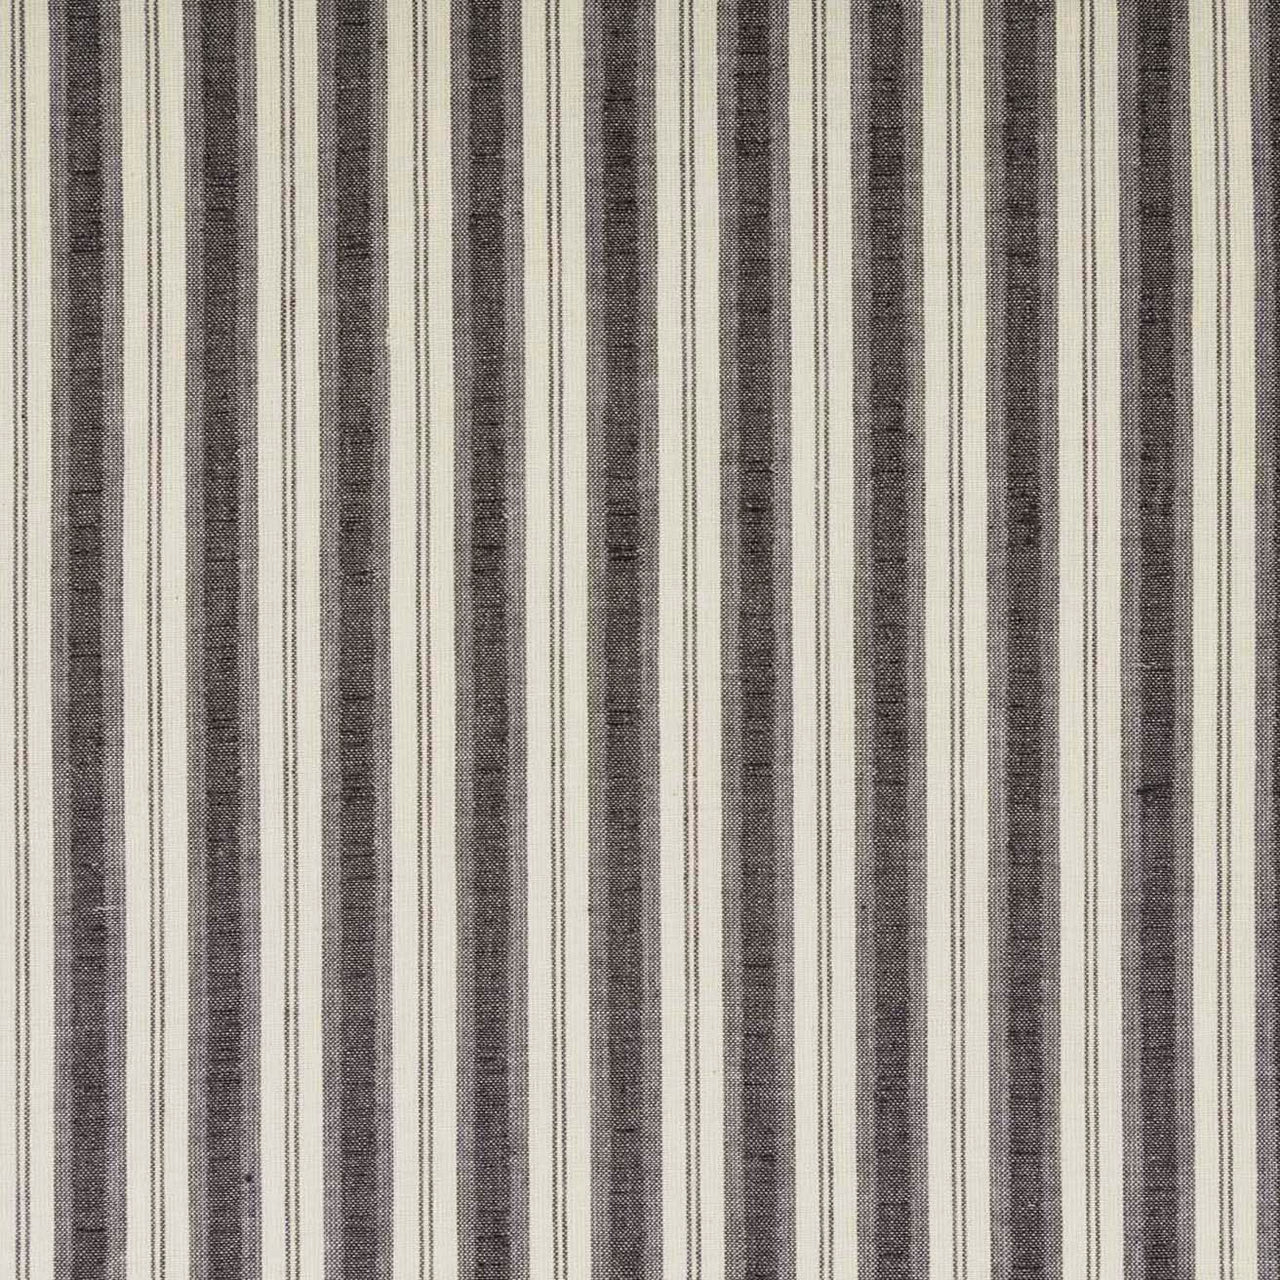 Ashmont Ticking Stripe Prairie Short Panel Set of 2 63x36x18 VHC Brands